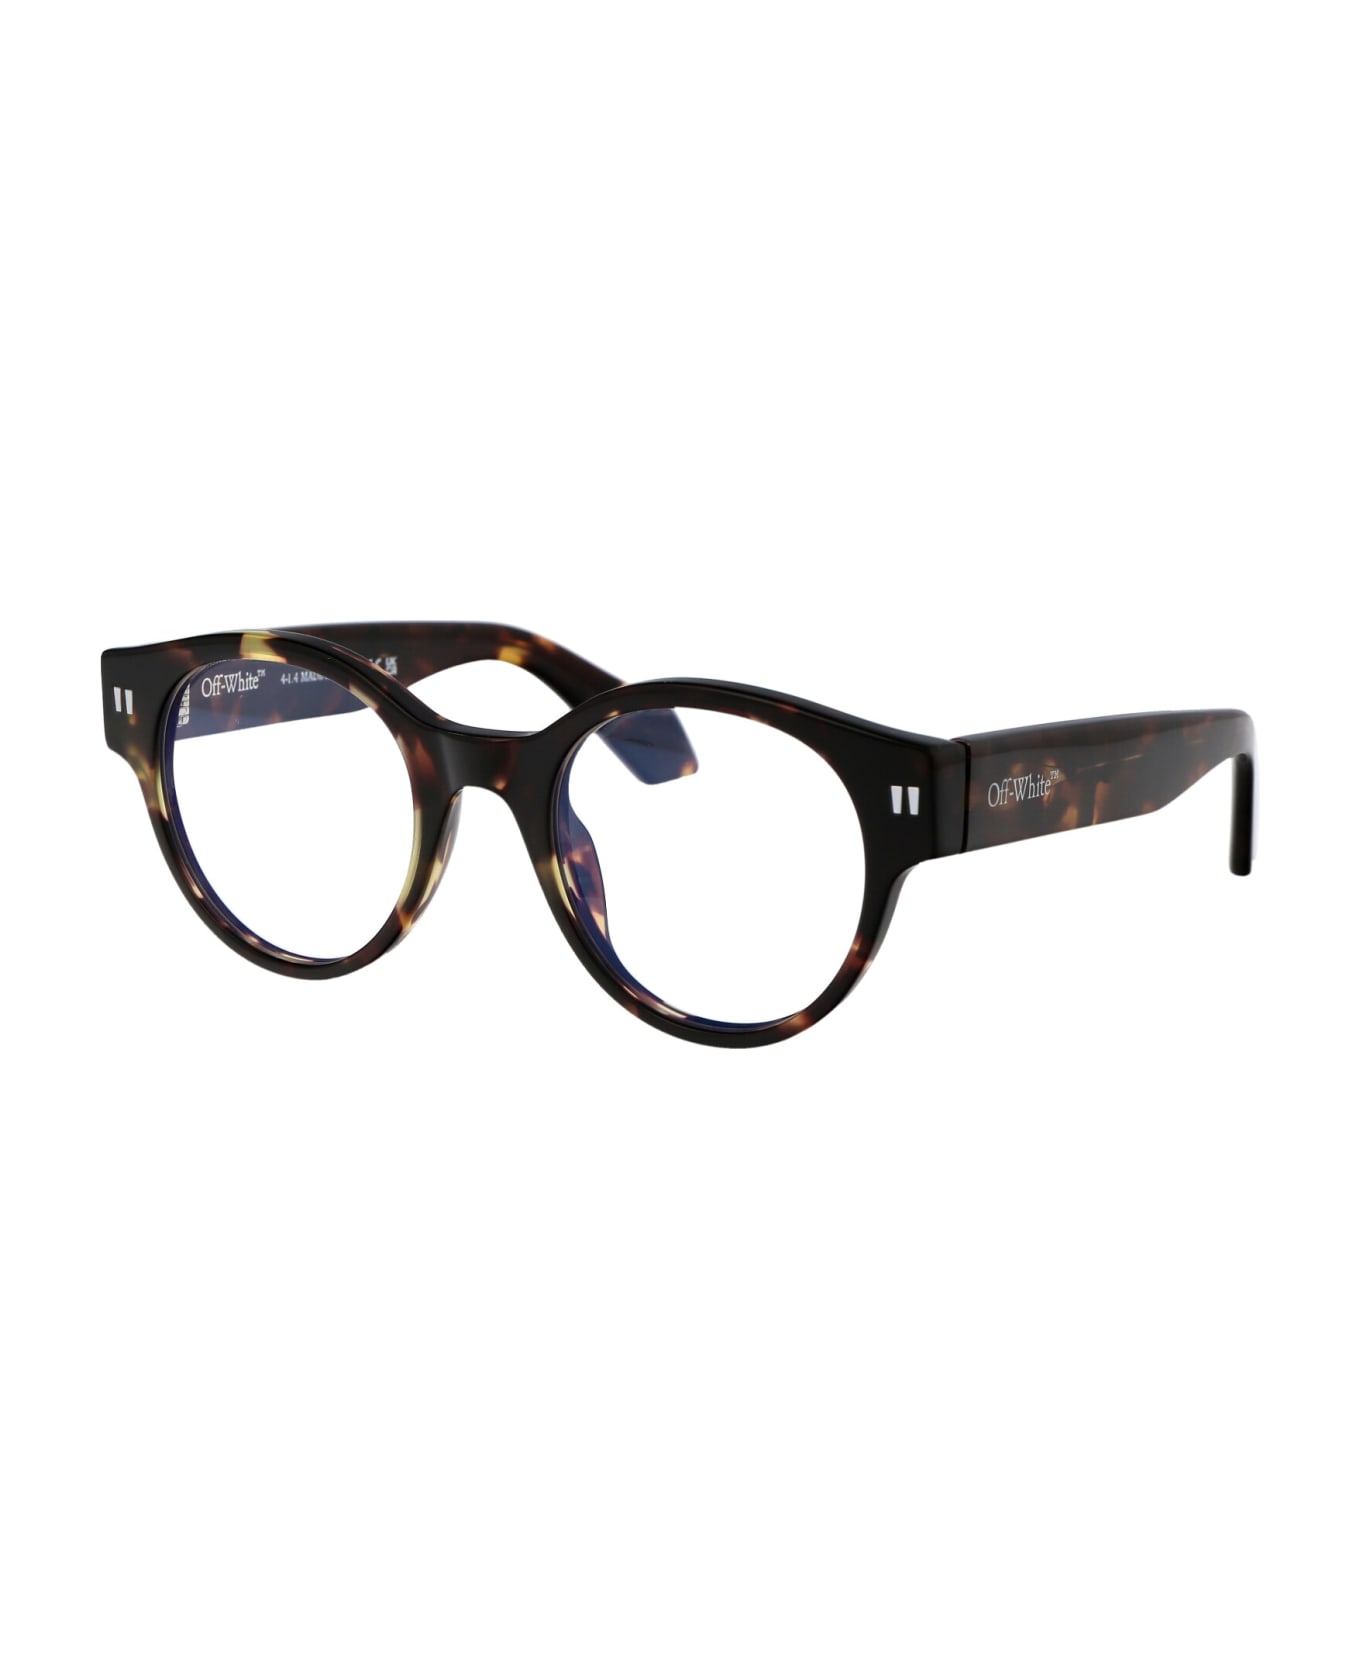 Off-White Optical Style 55 Glasses - 6000 HAVANA